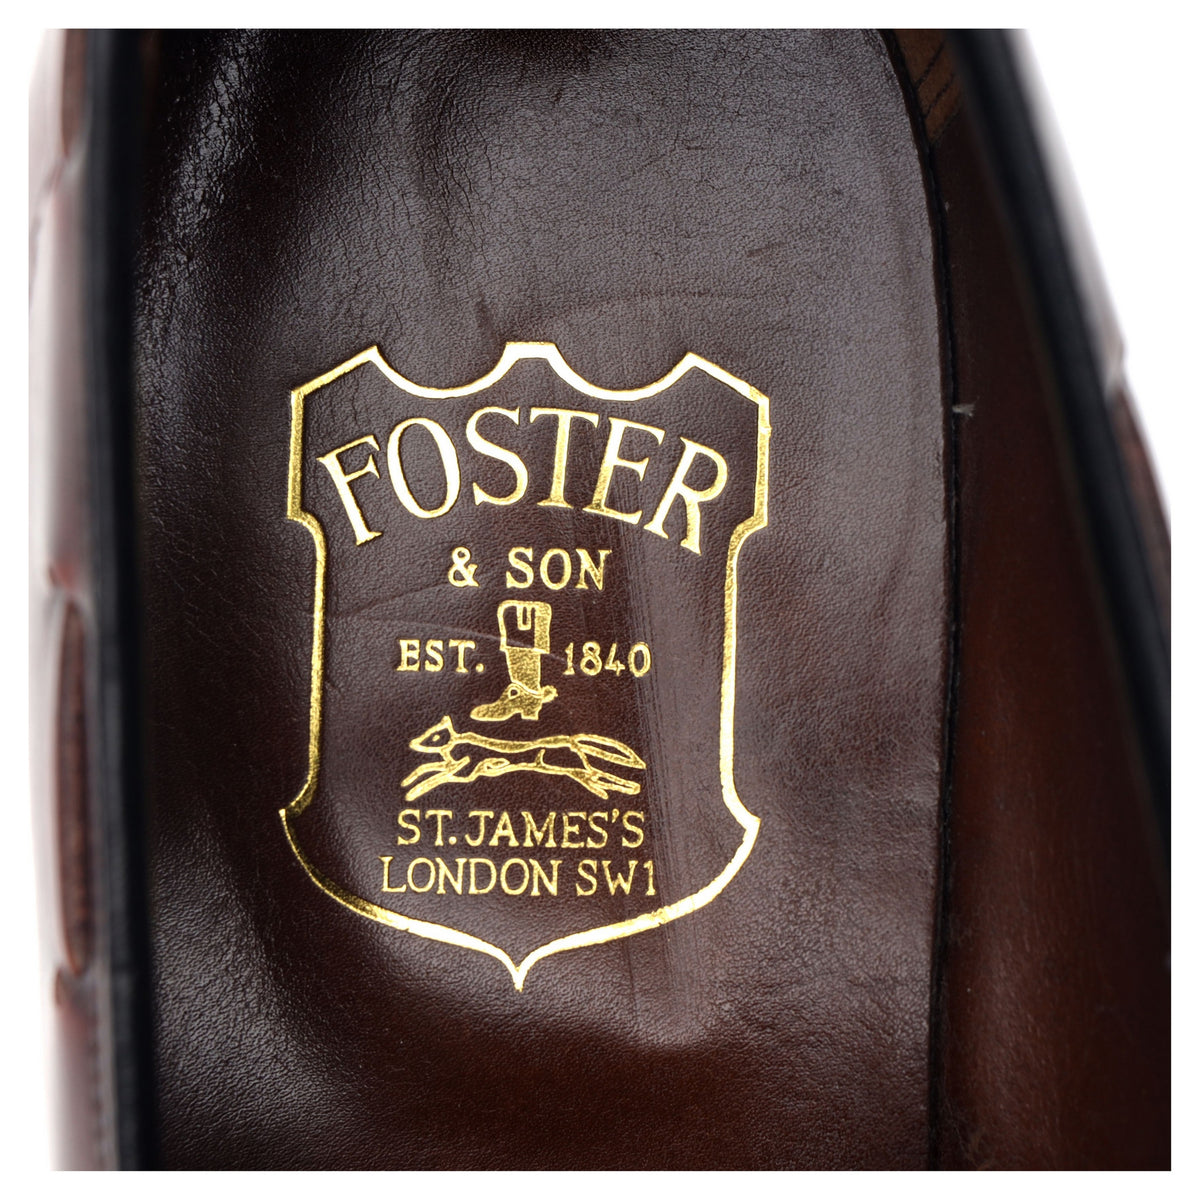 Oxblood Leather Tassel Loafers UK 7 E